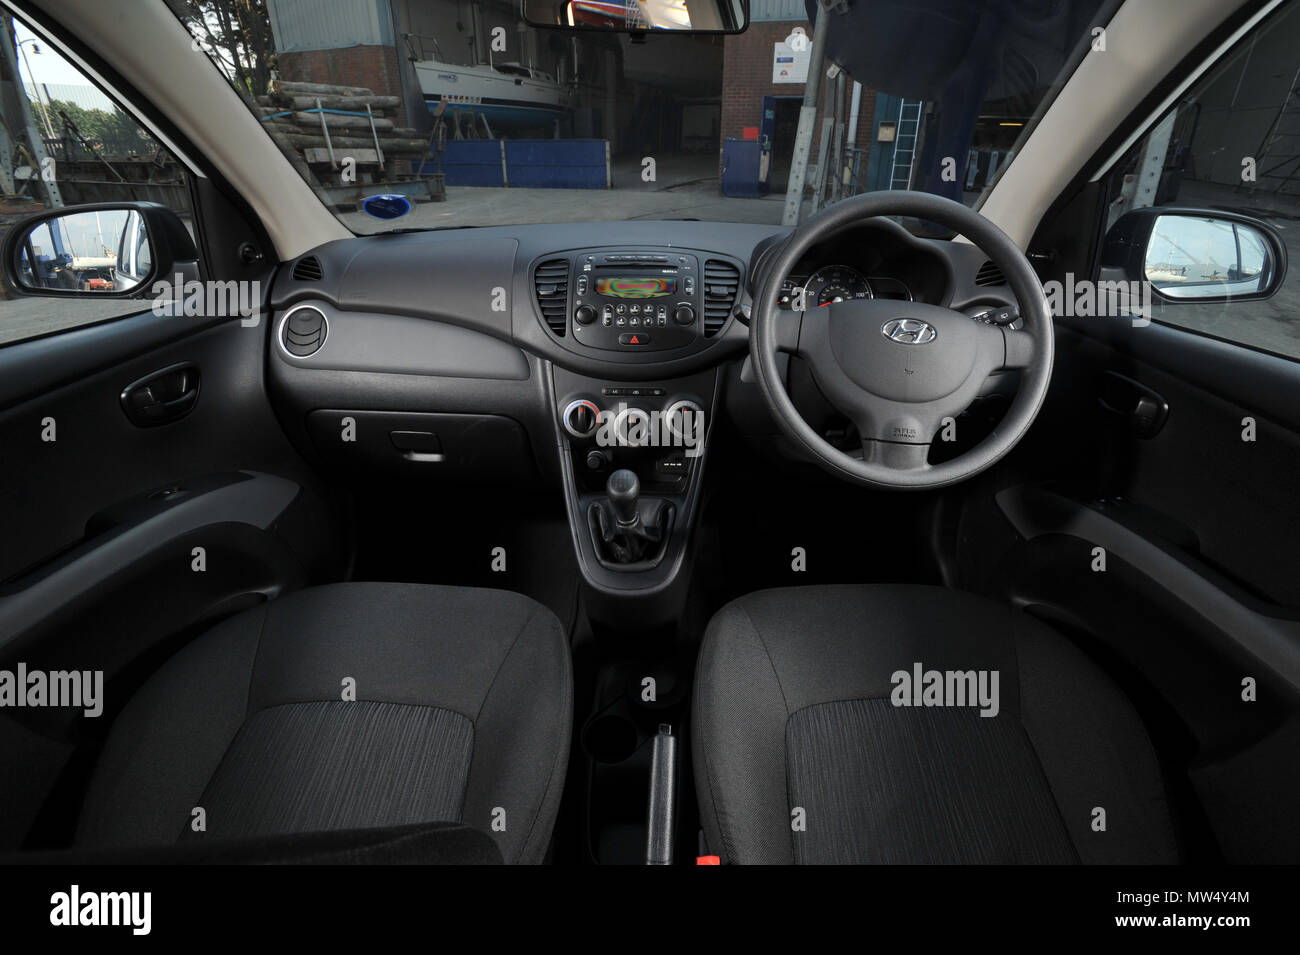 2012 Hyundai i10 compact city car Stock Photo